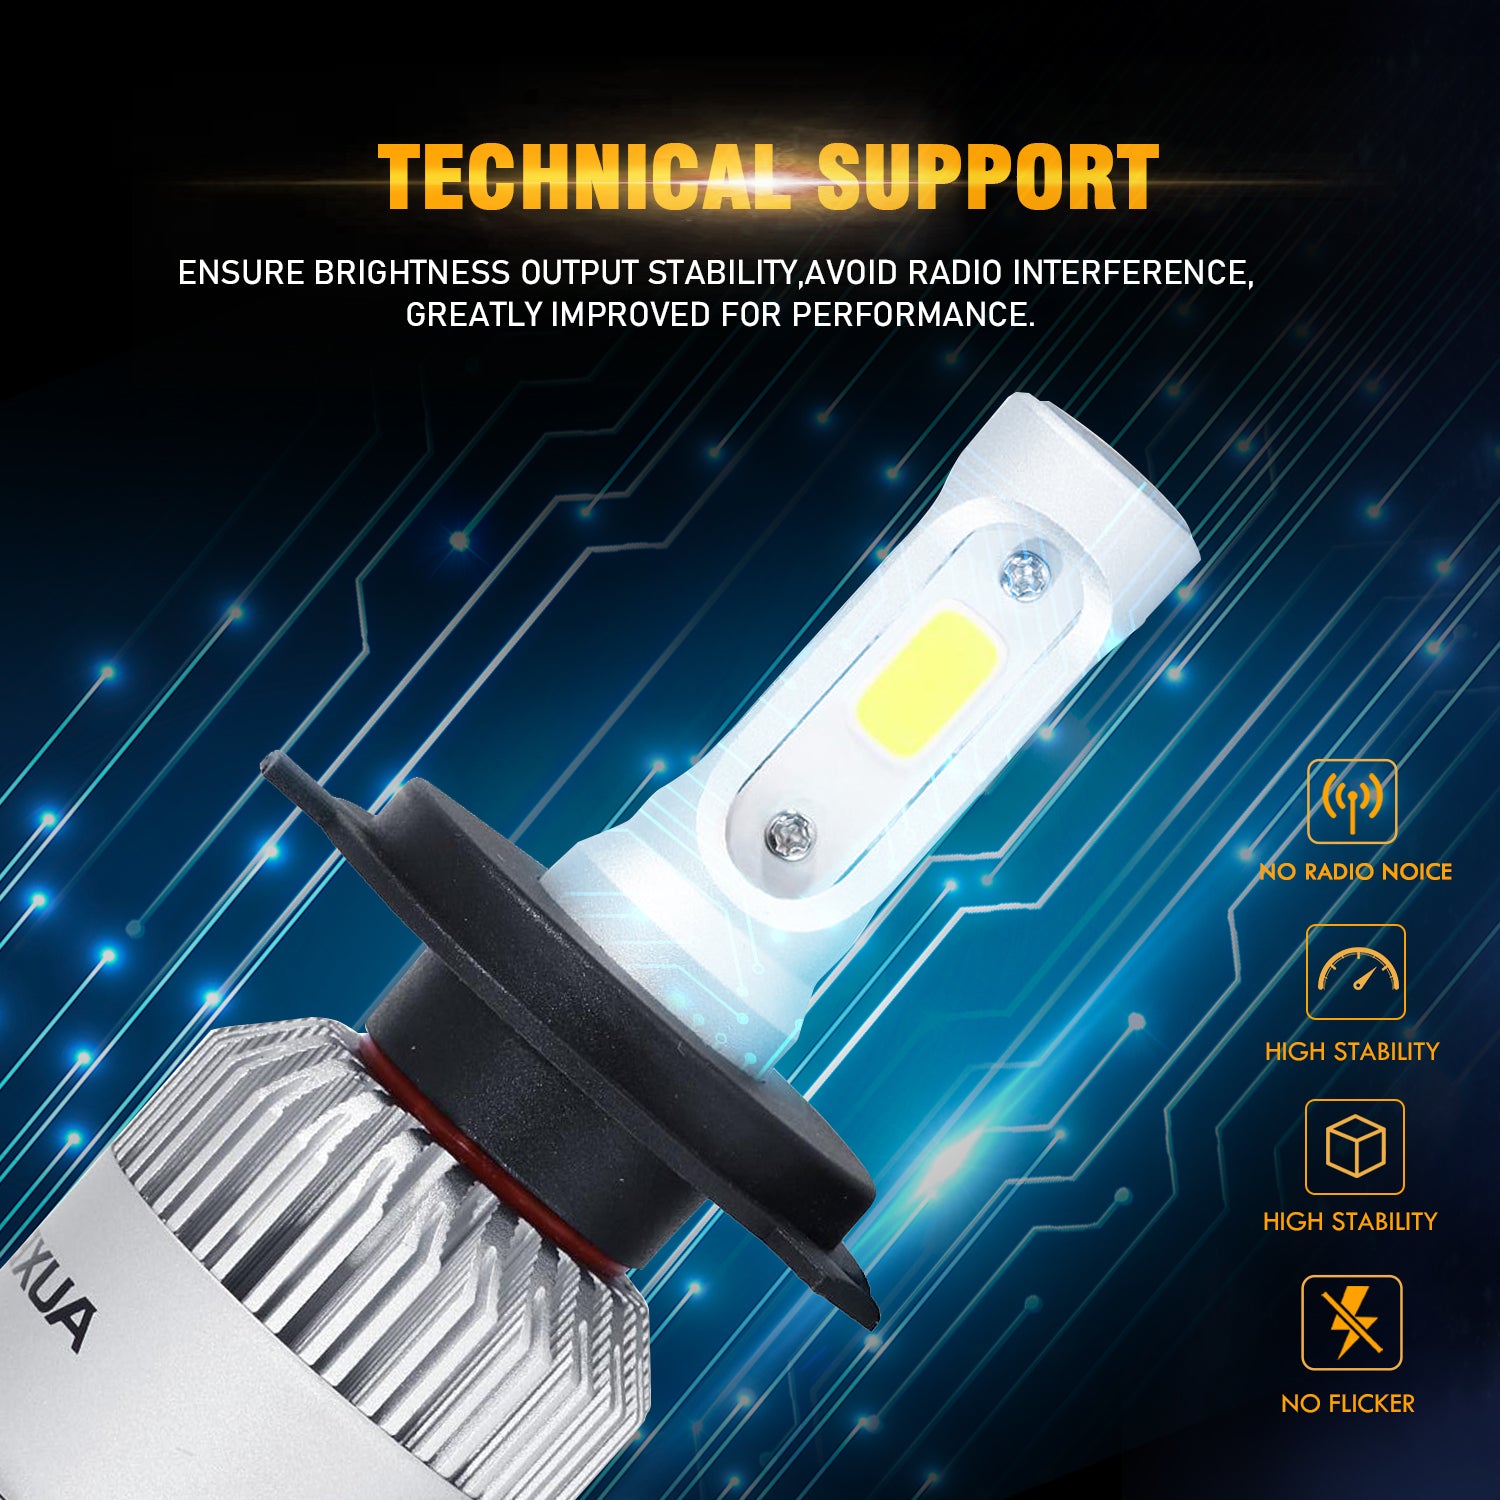 Auxbeam® H4/9003 Super Brightest COB S2 Series Led Headlight Bulbs